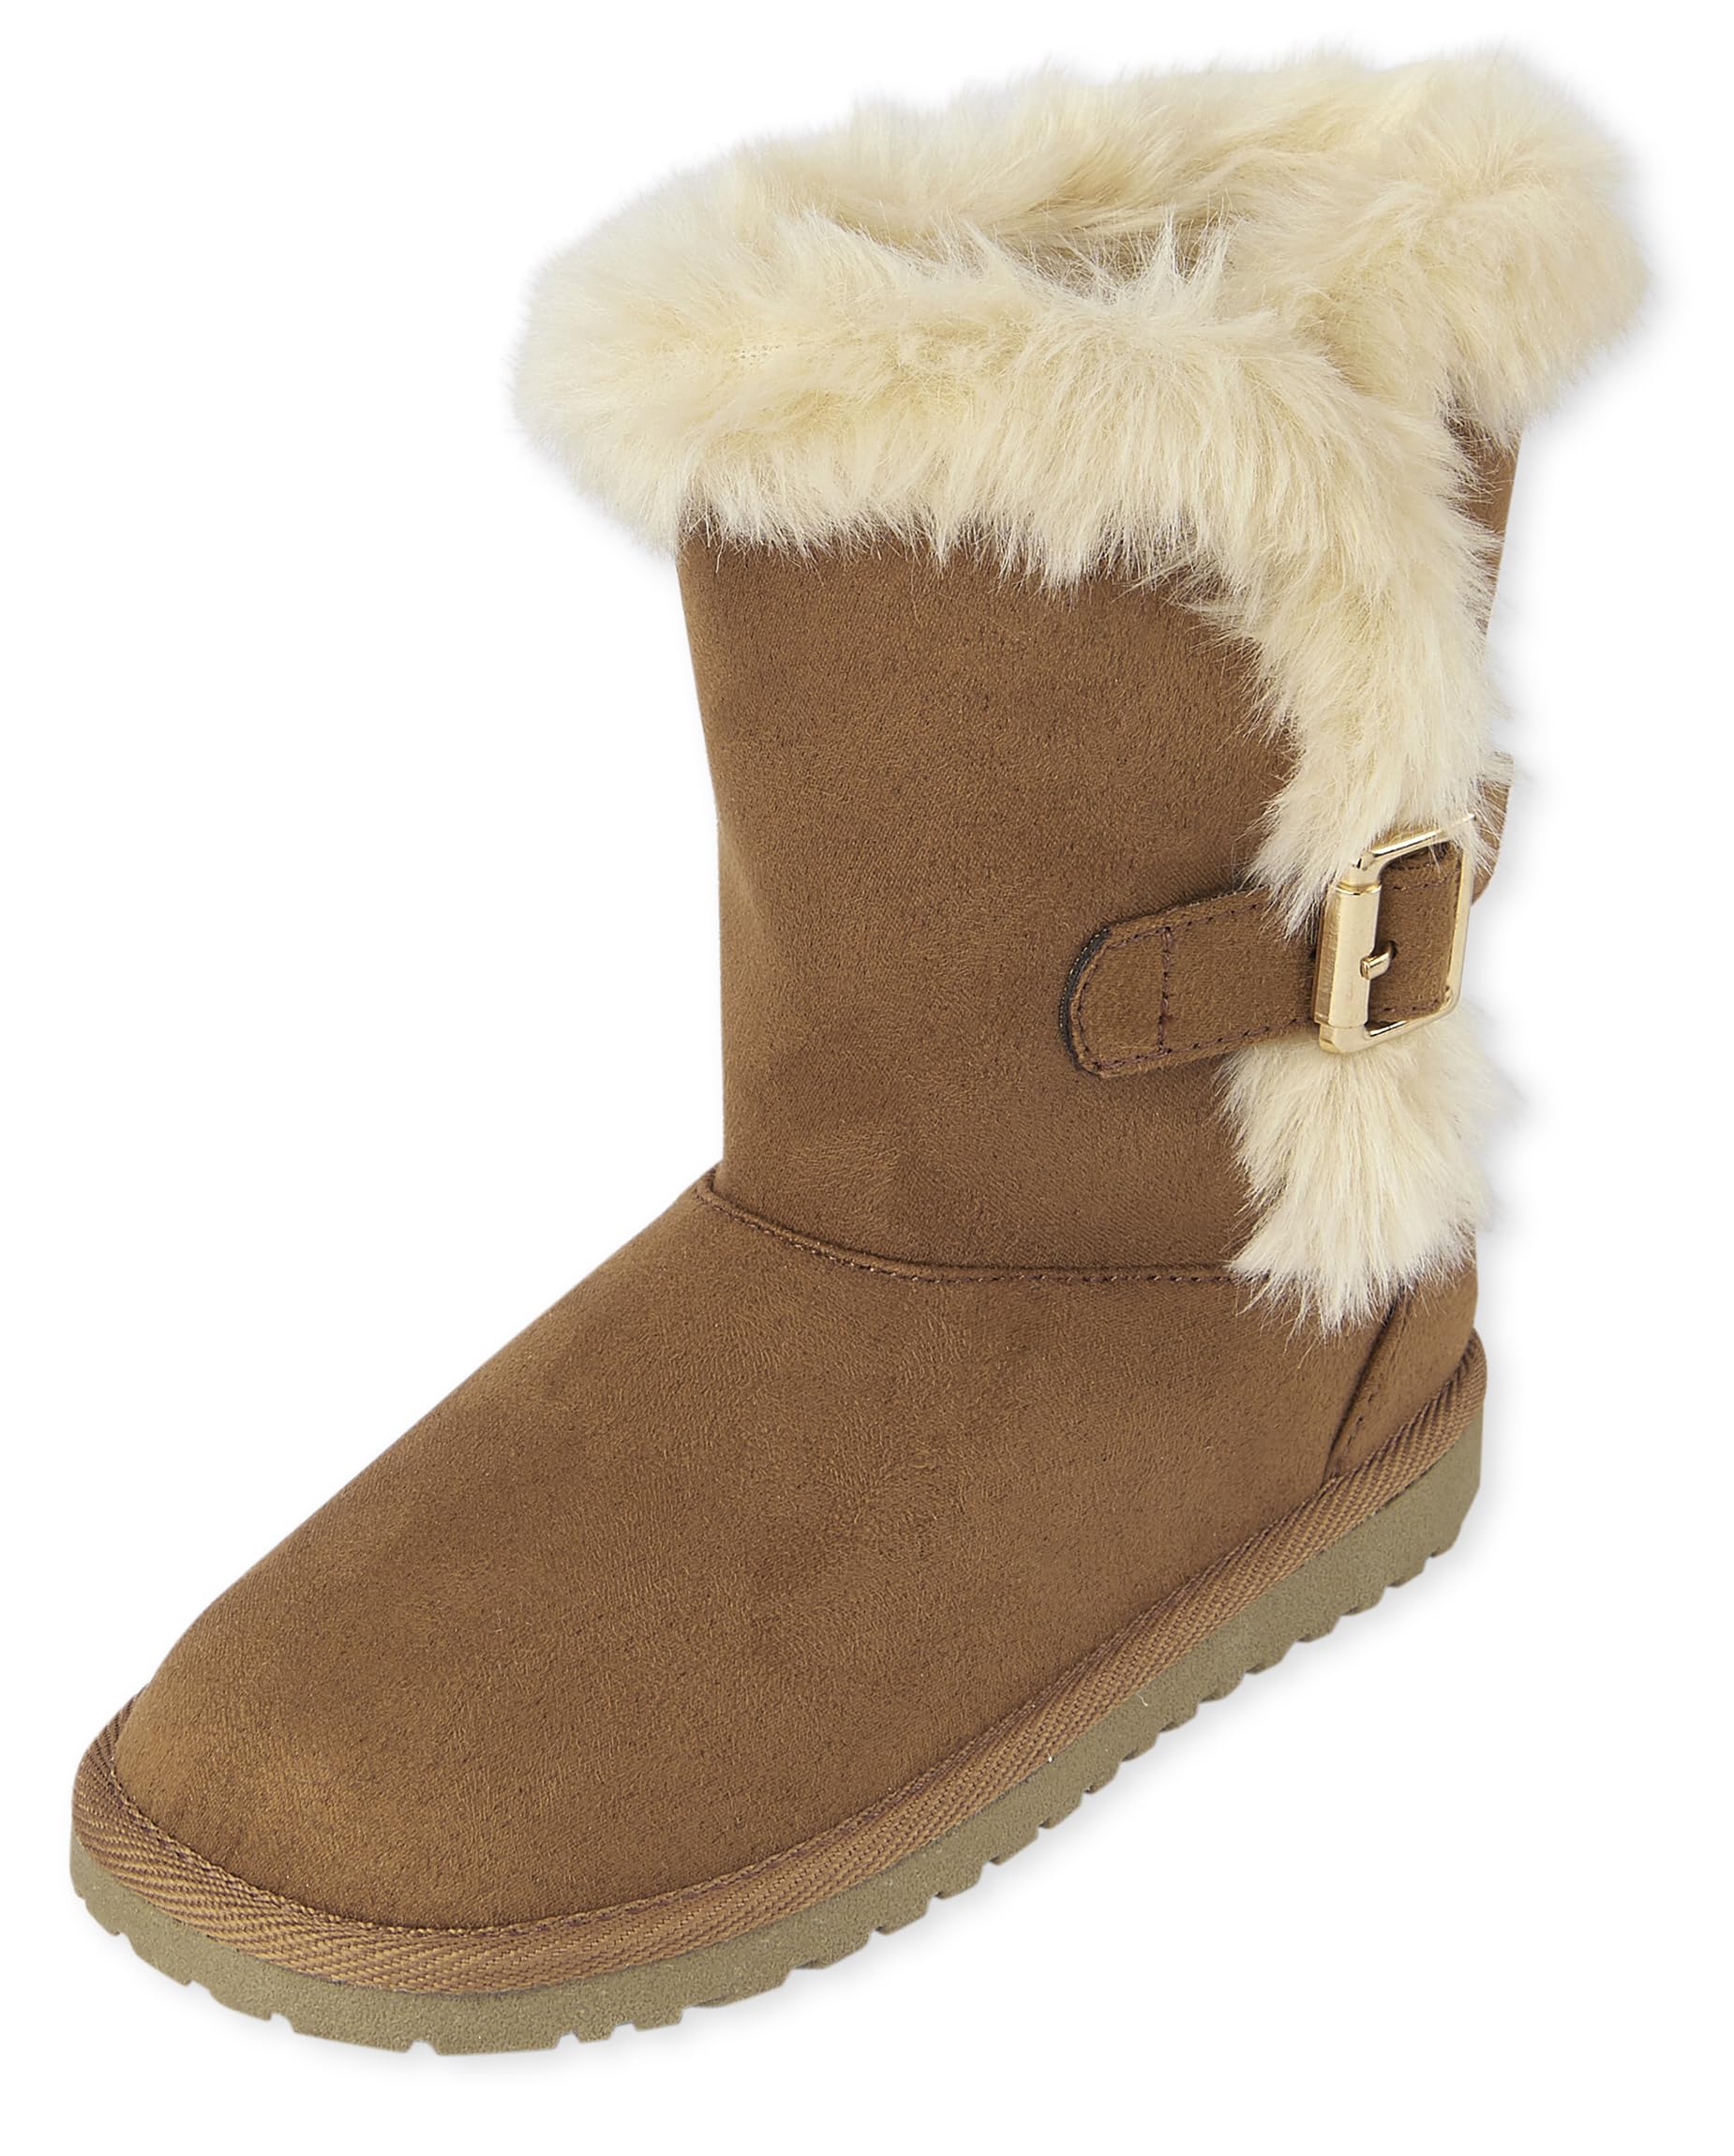 The Children's Place Girl's Warm Lightweight Winter Boot Fashion